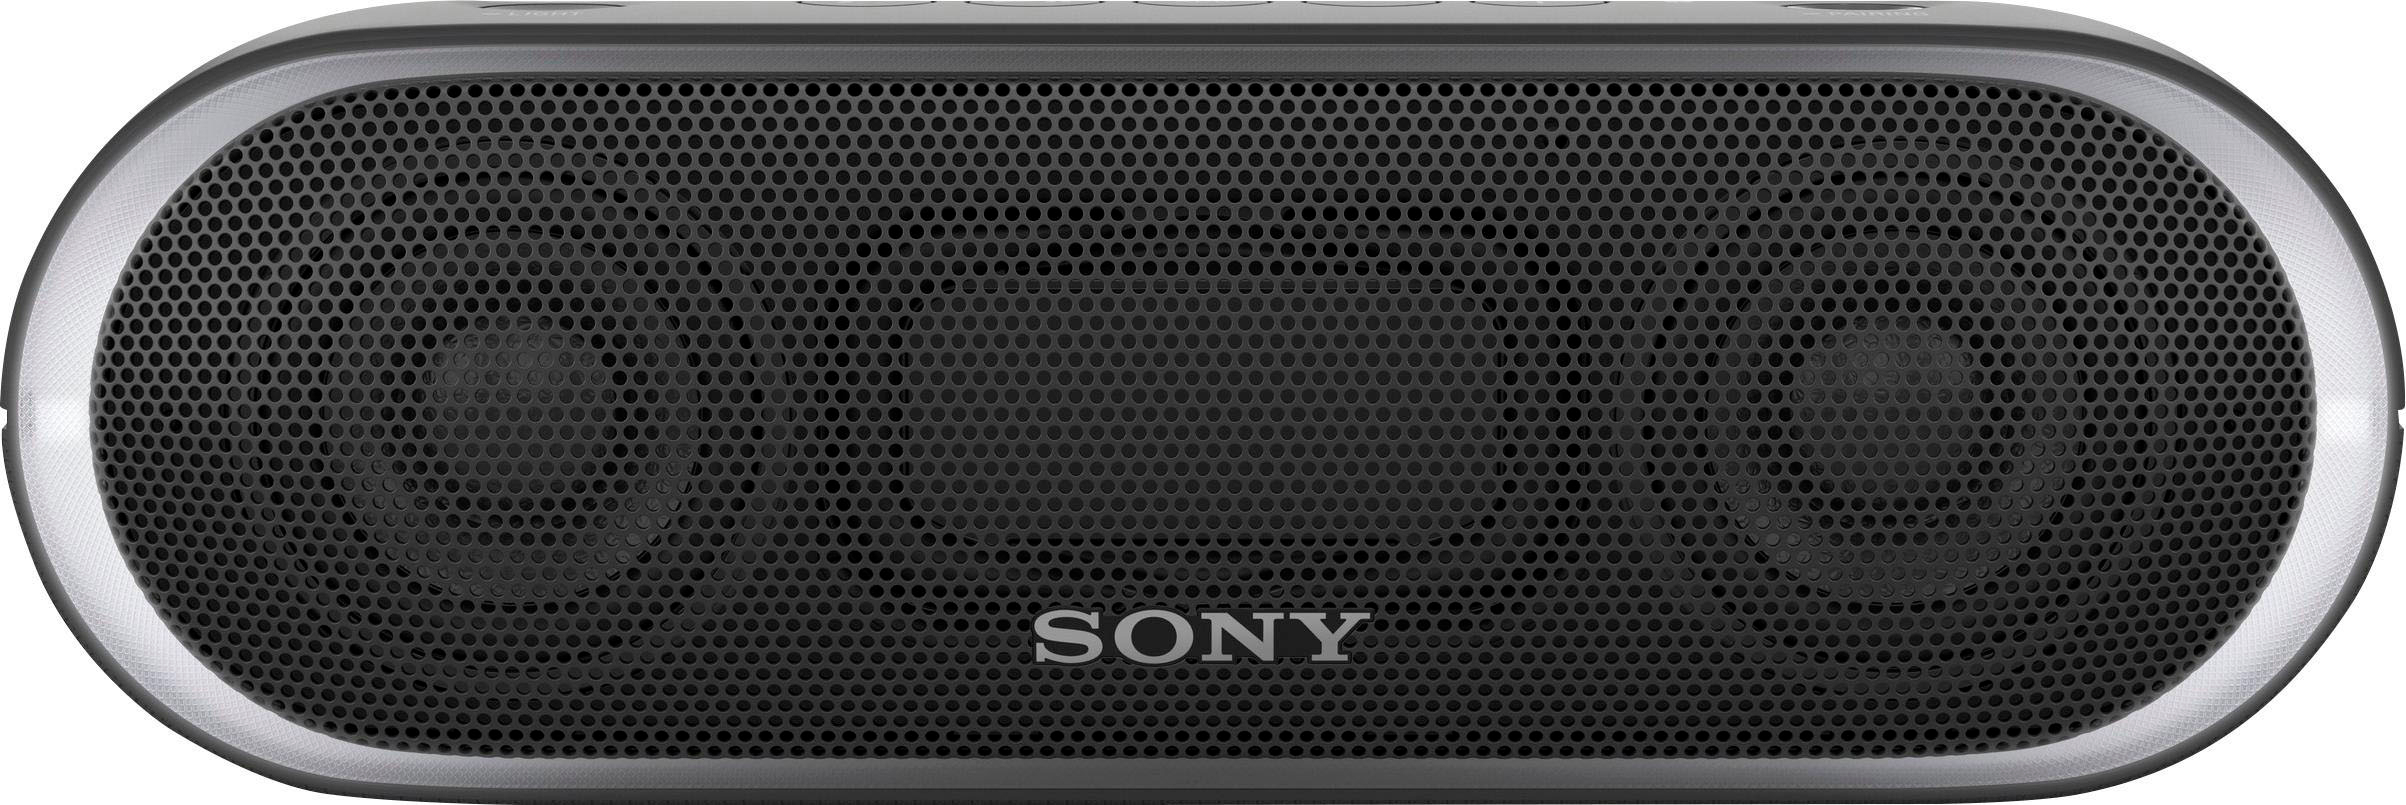 Sony XB20 Portable Bluetooth Speaker Black SRSXB20  - Best Buy